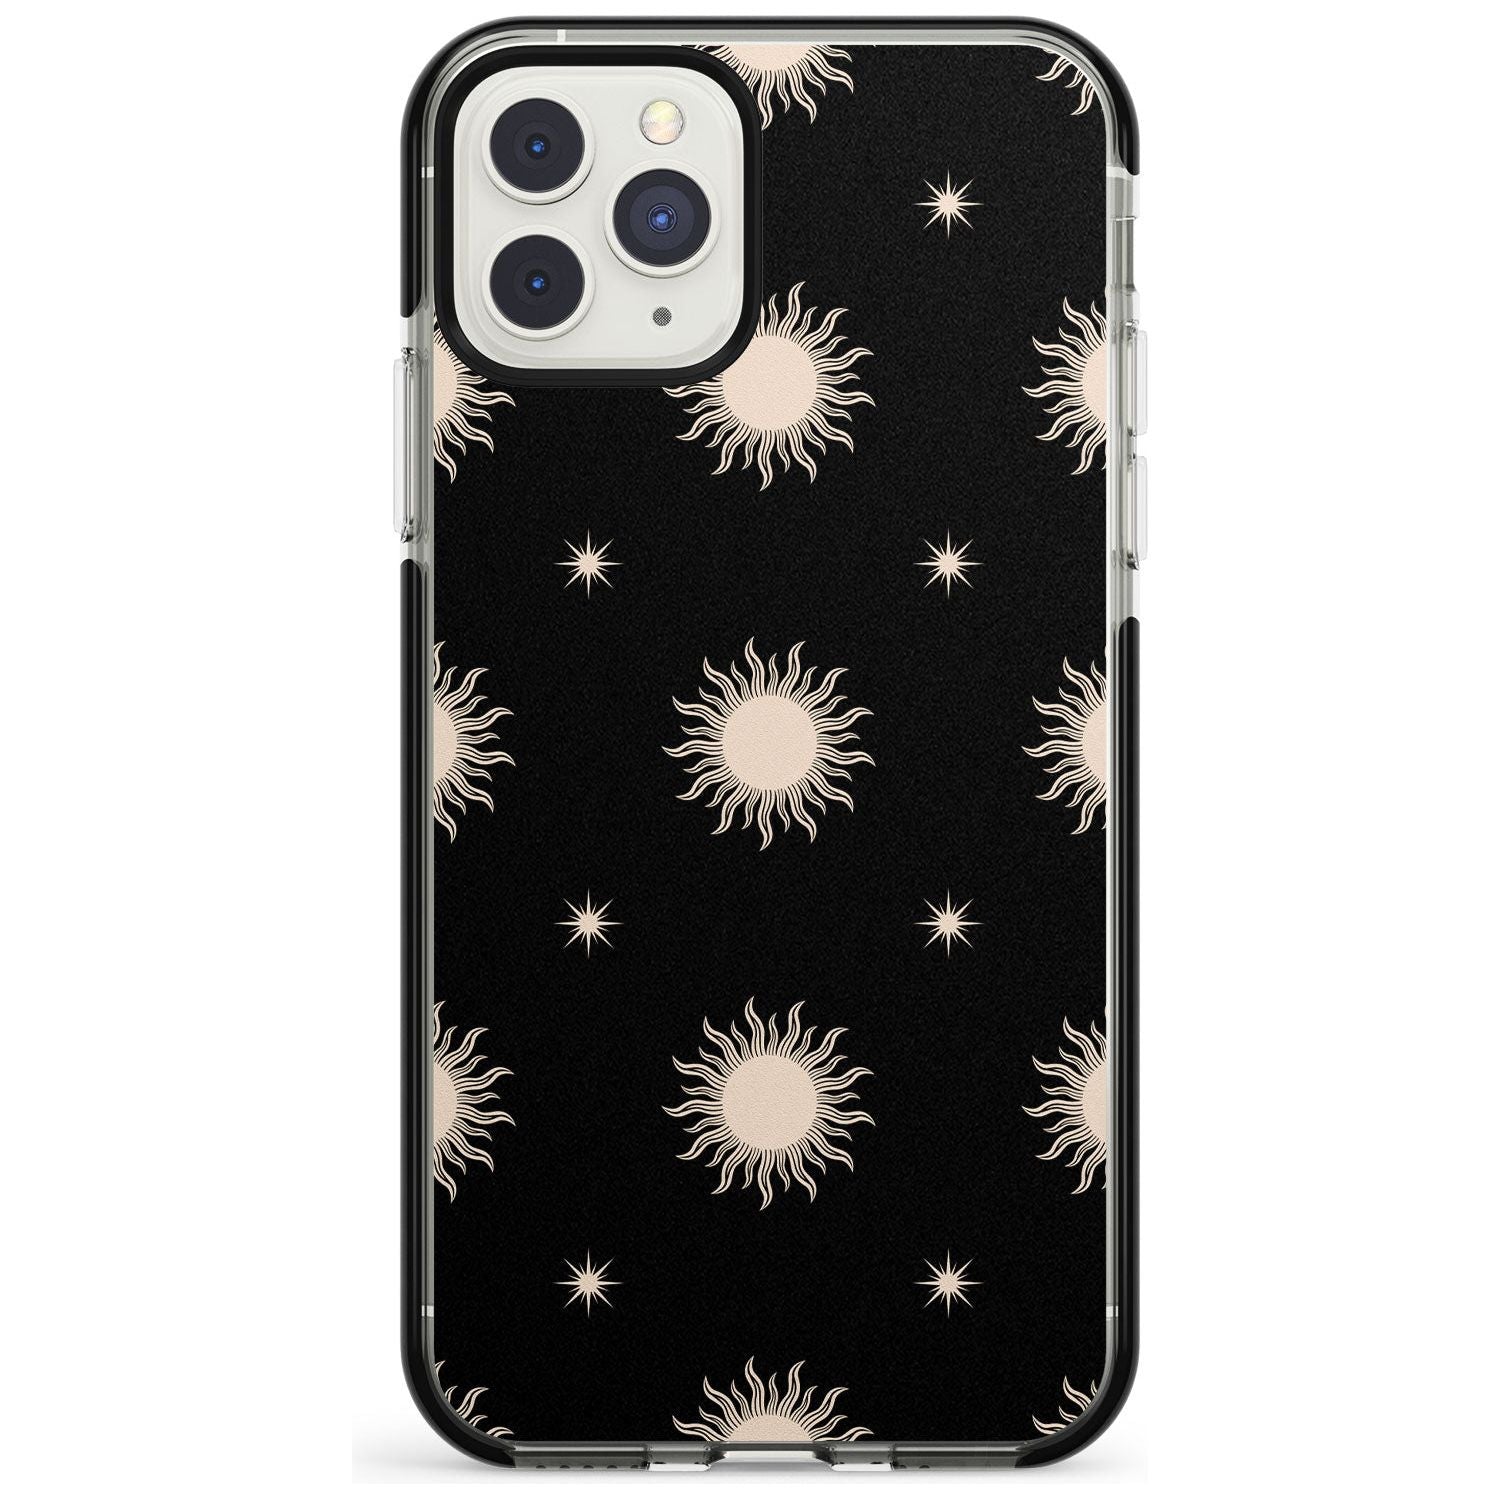 Celestial Patterns Classic Suns (Black) Phone Case iPhone 11 Pro Max / Black Impact Case,iPhone 11 Pro / Black Impact Case,iPhone 12 Pro Max / Black Impact Case Blanc Space